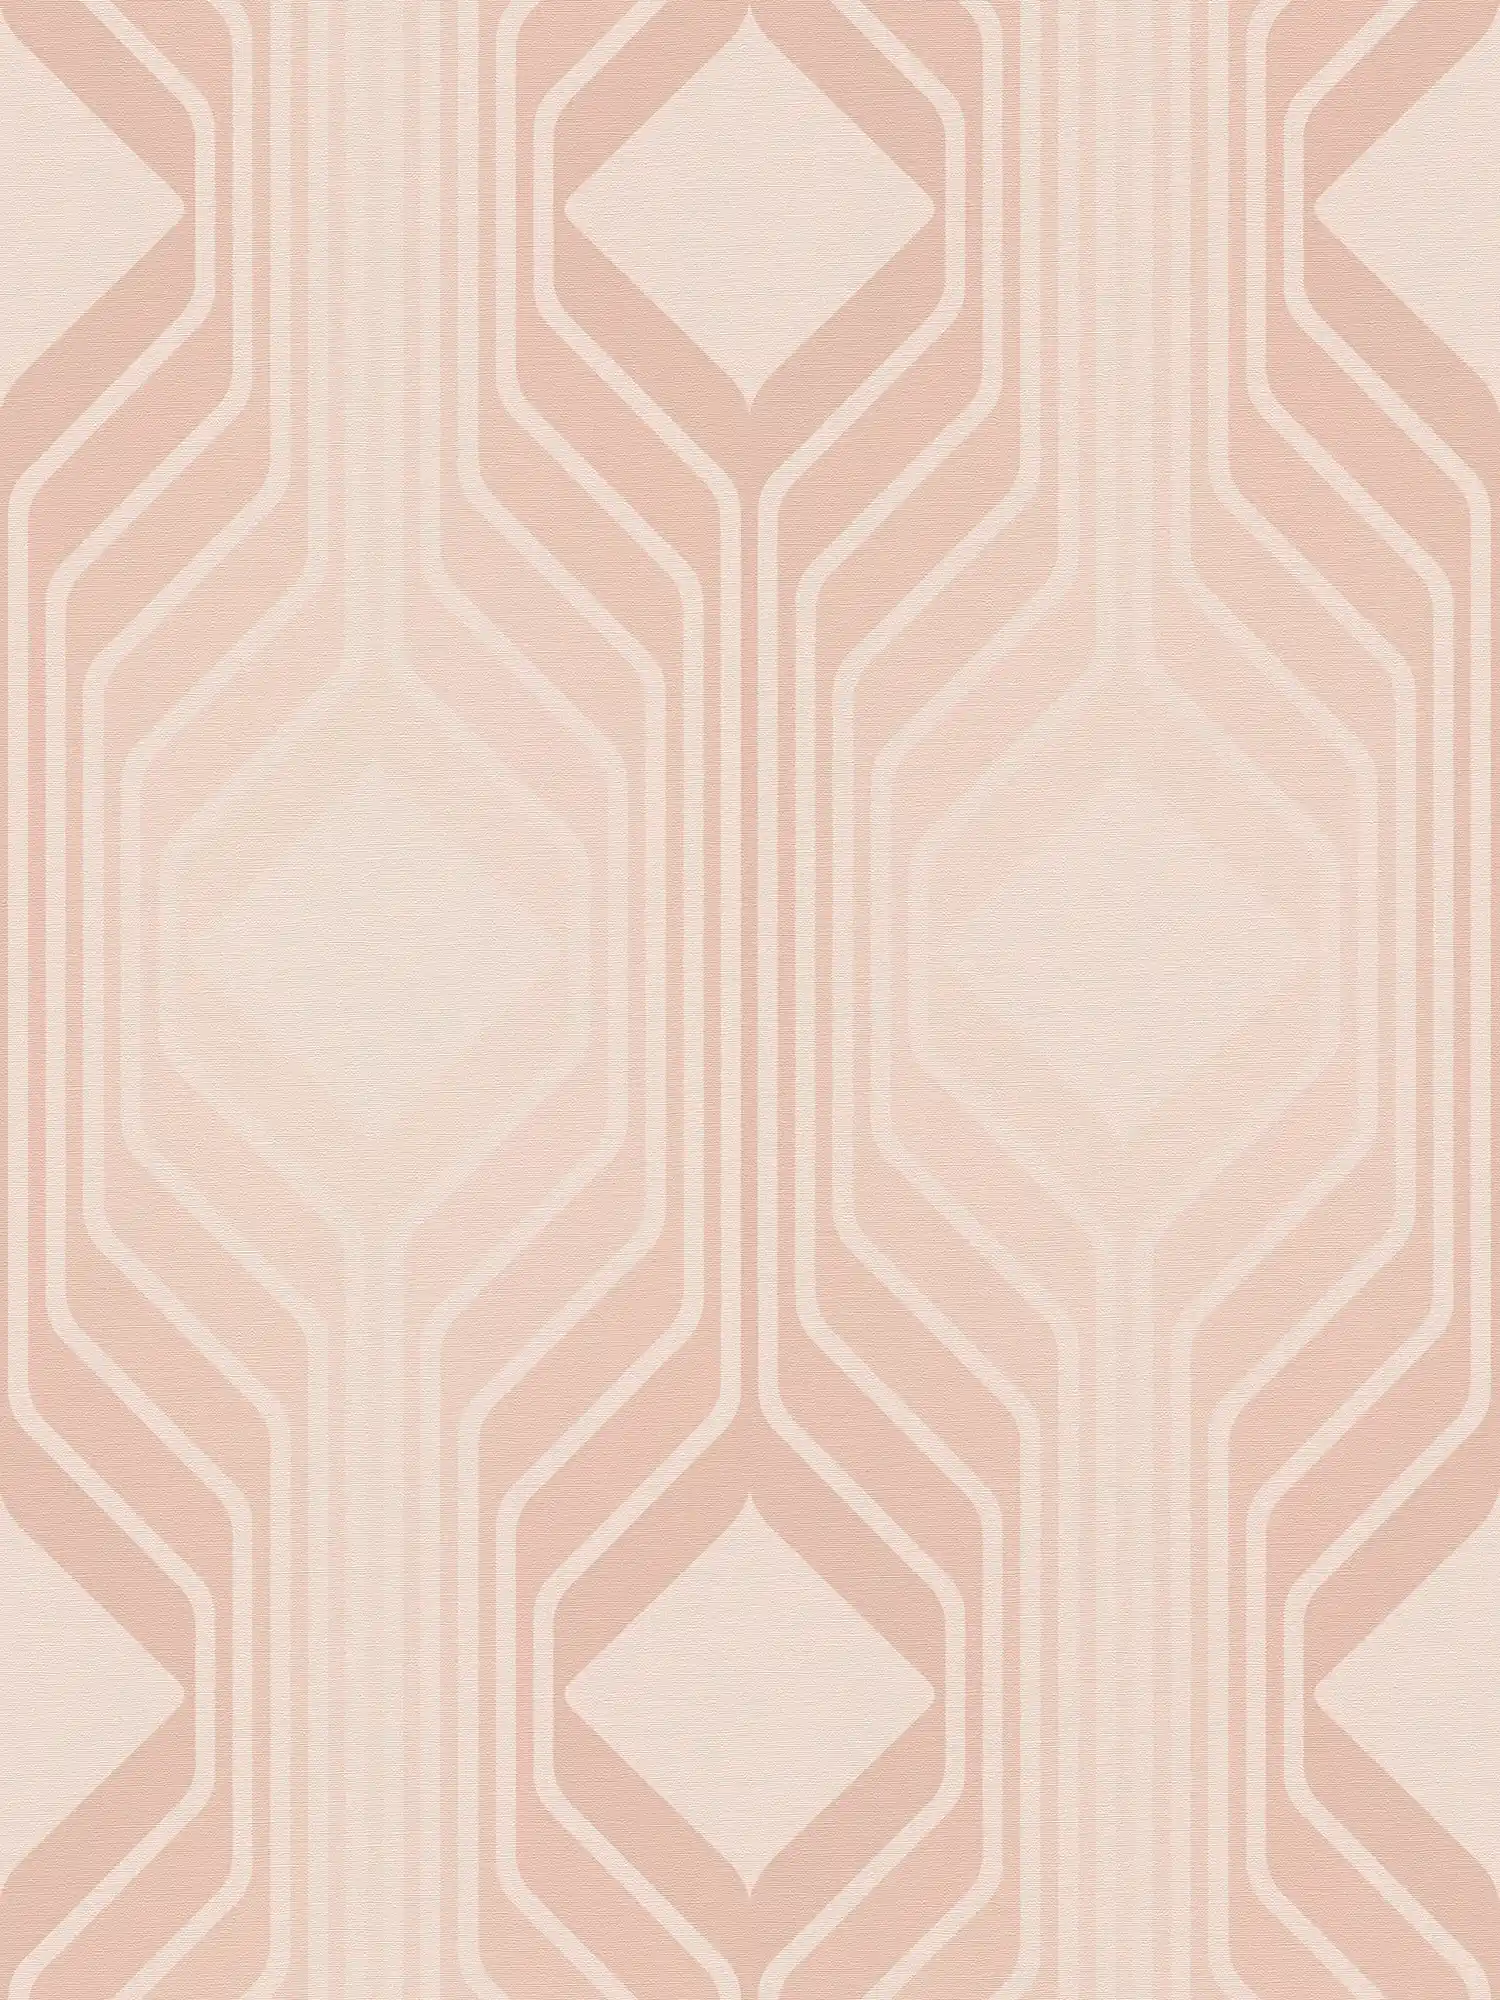 Non-woven wallpaper with rhombus pattern in retro style - beige, cream
